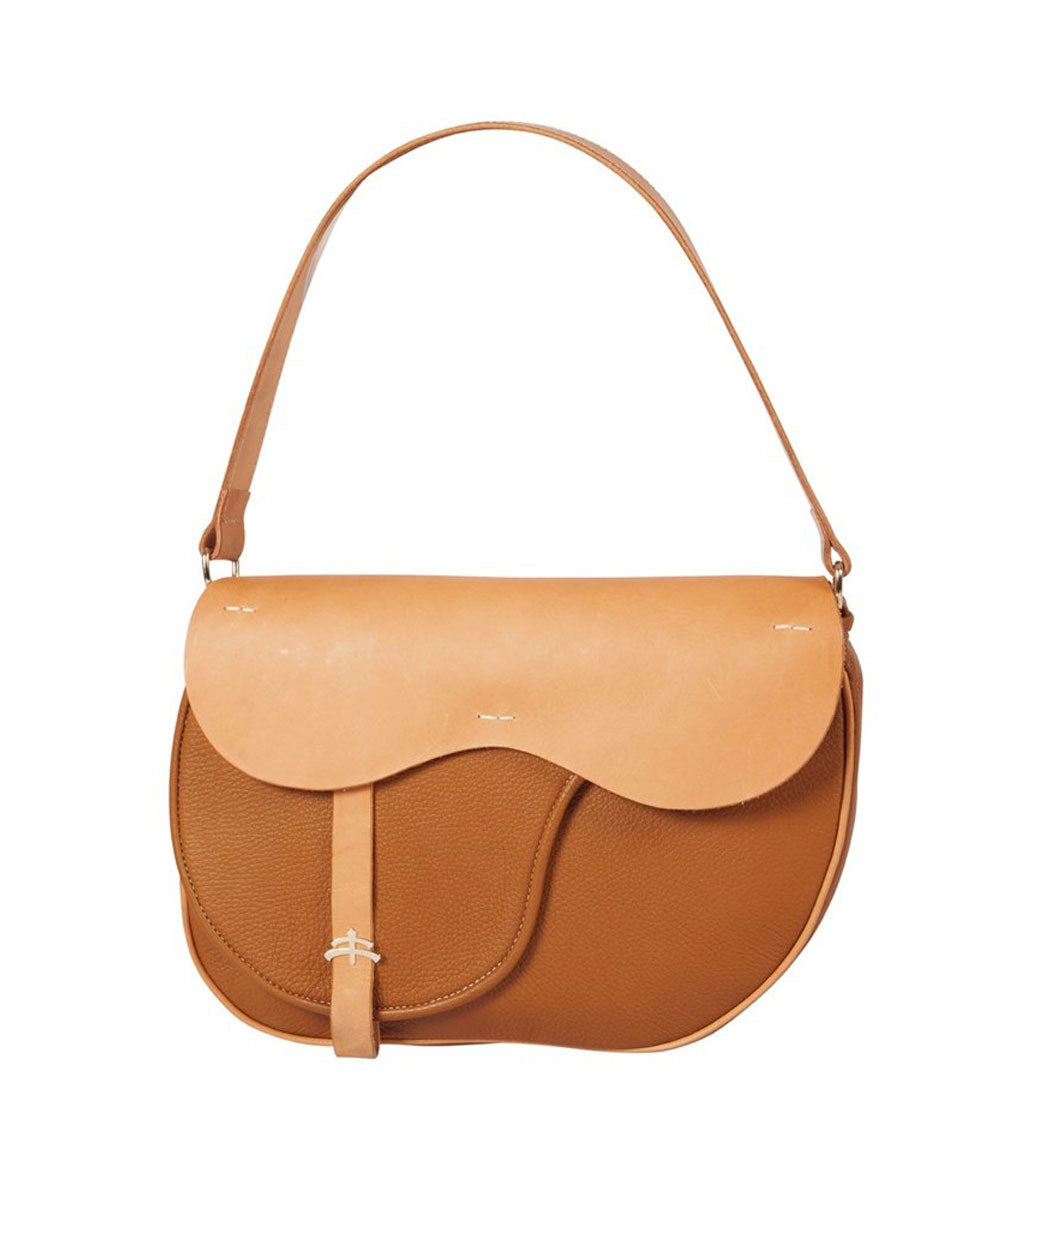 Leather handbag - Venice